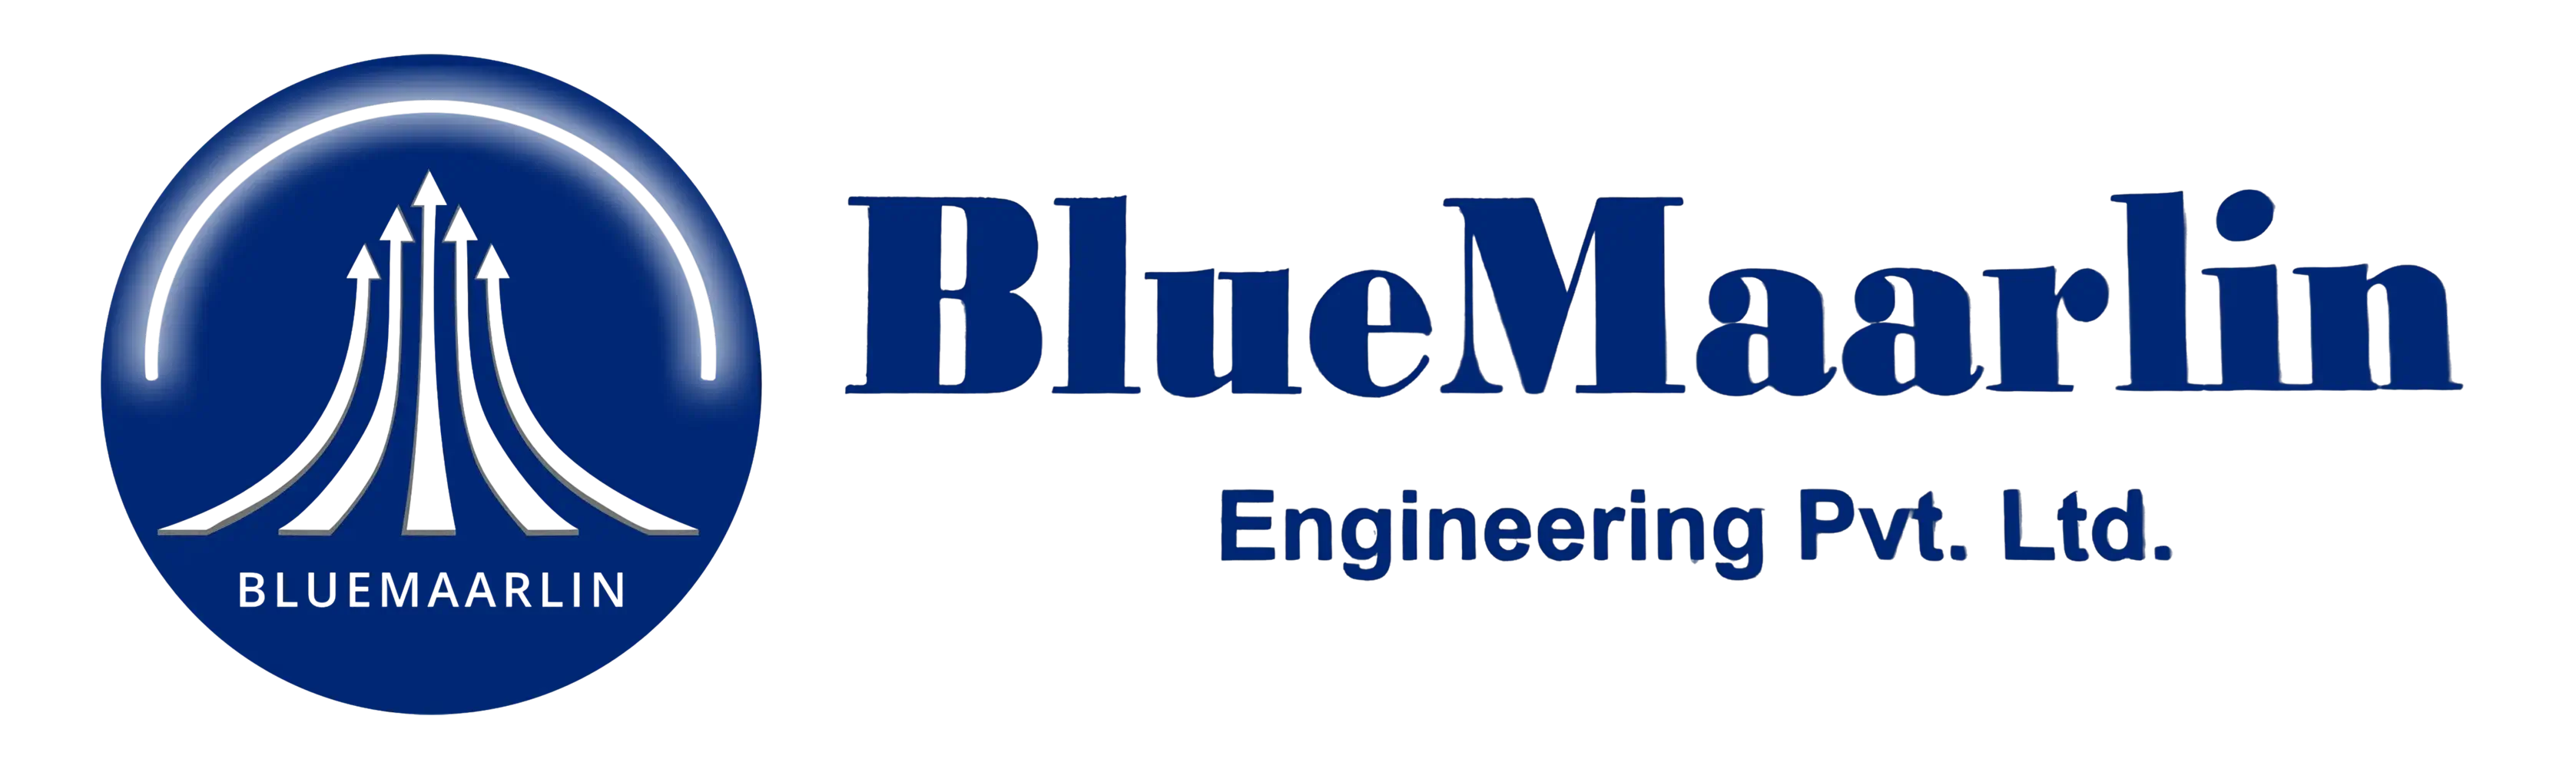 Blue Maarlin Engineering Pvt. Ltd.